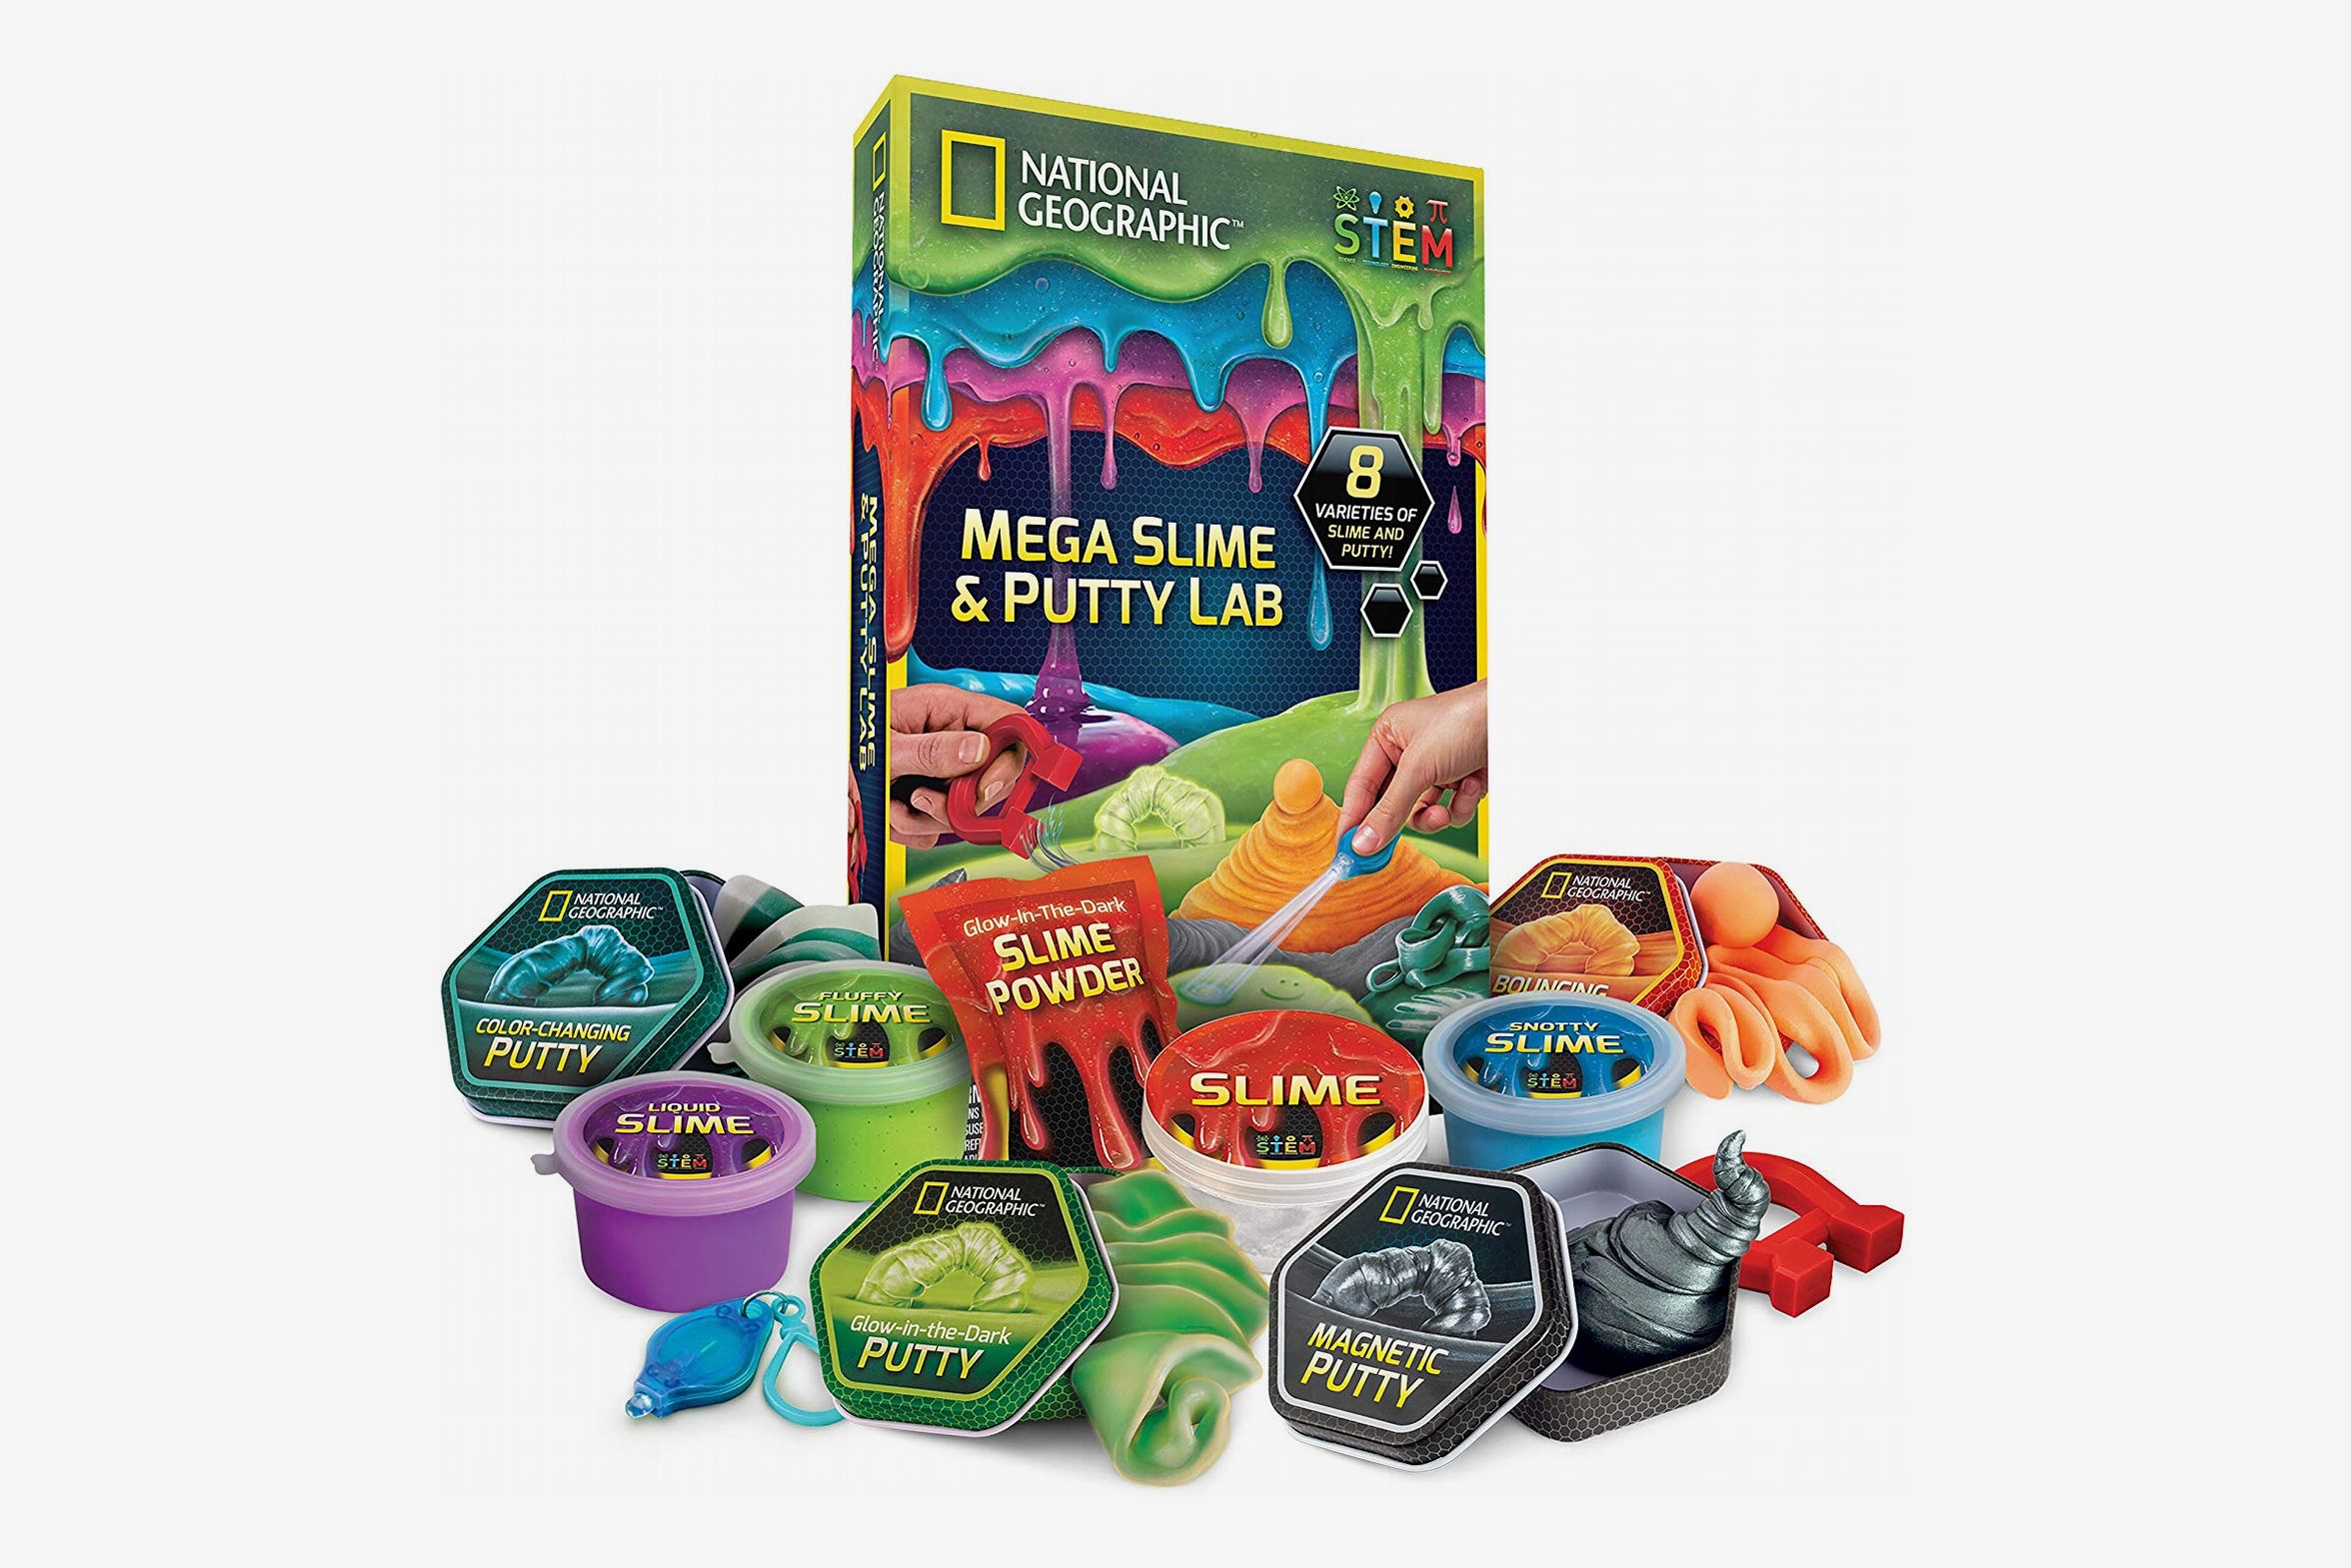 Make Own Slime Putty Kids Girls Boys Toy Christmas Xmas Gift Play Lab Kit Set 